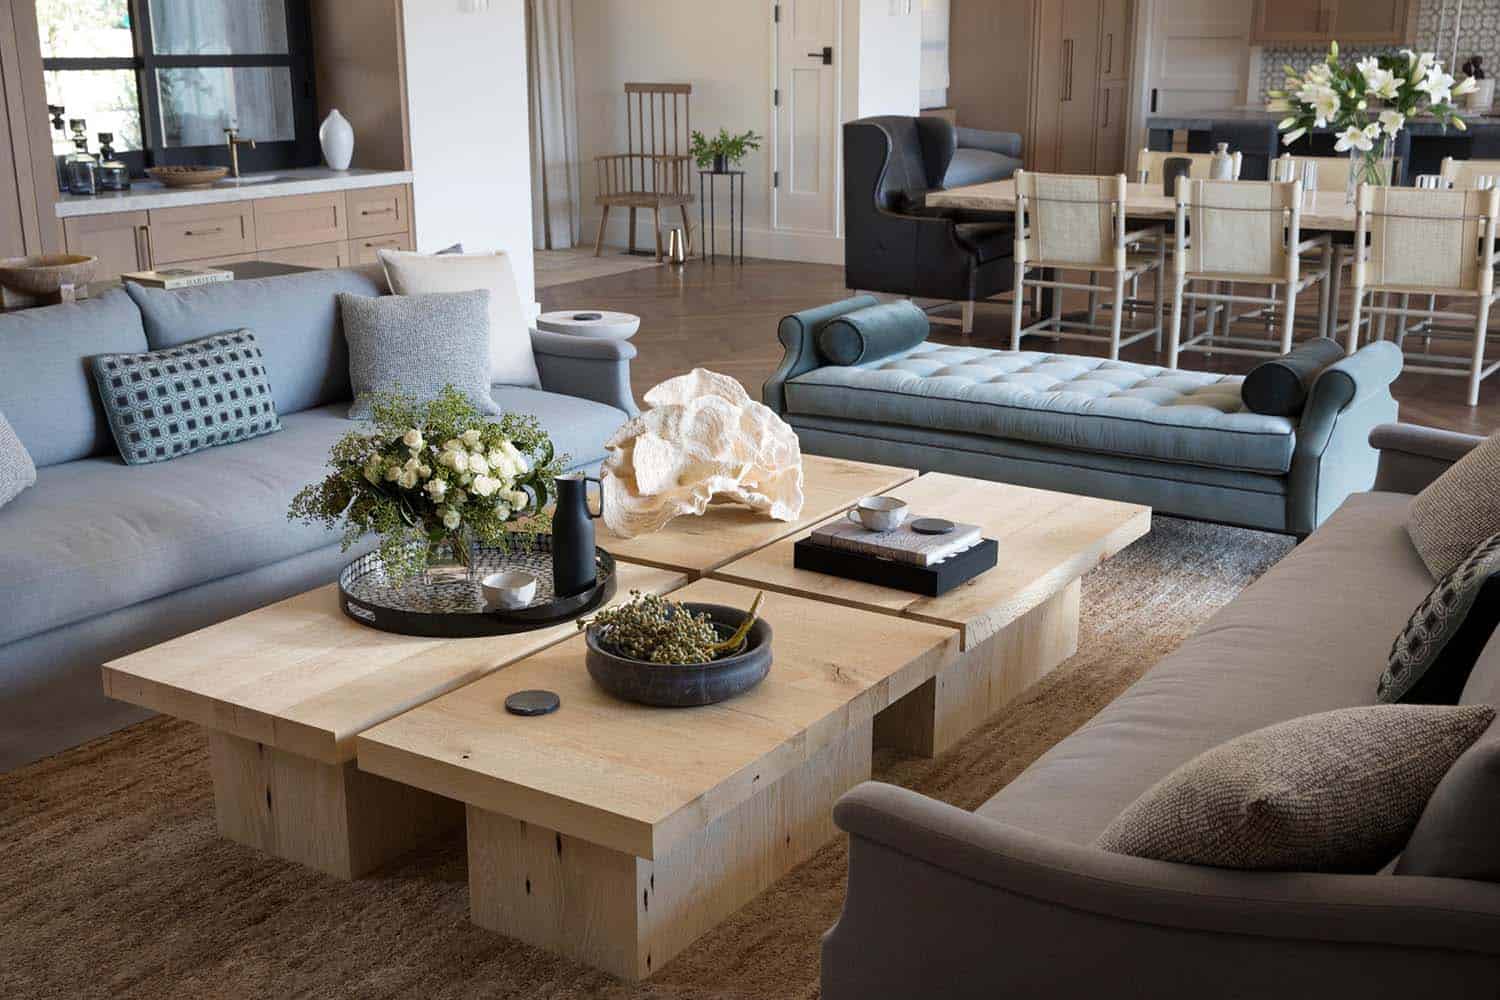 A modern glam living room